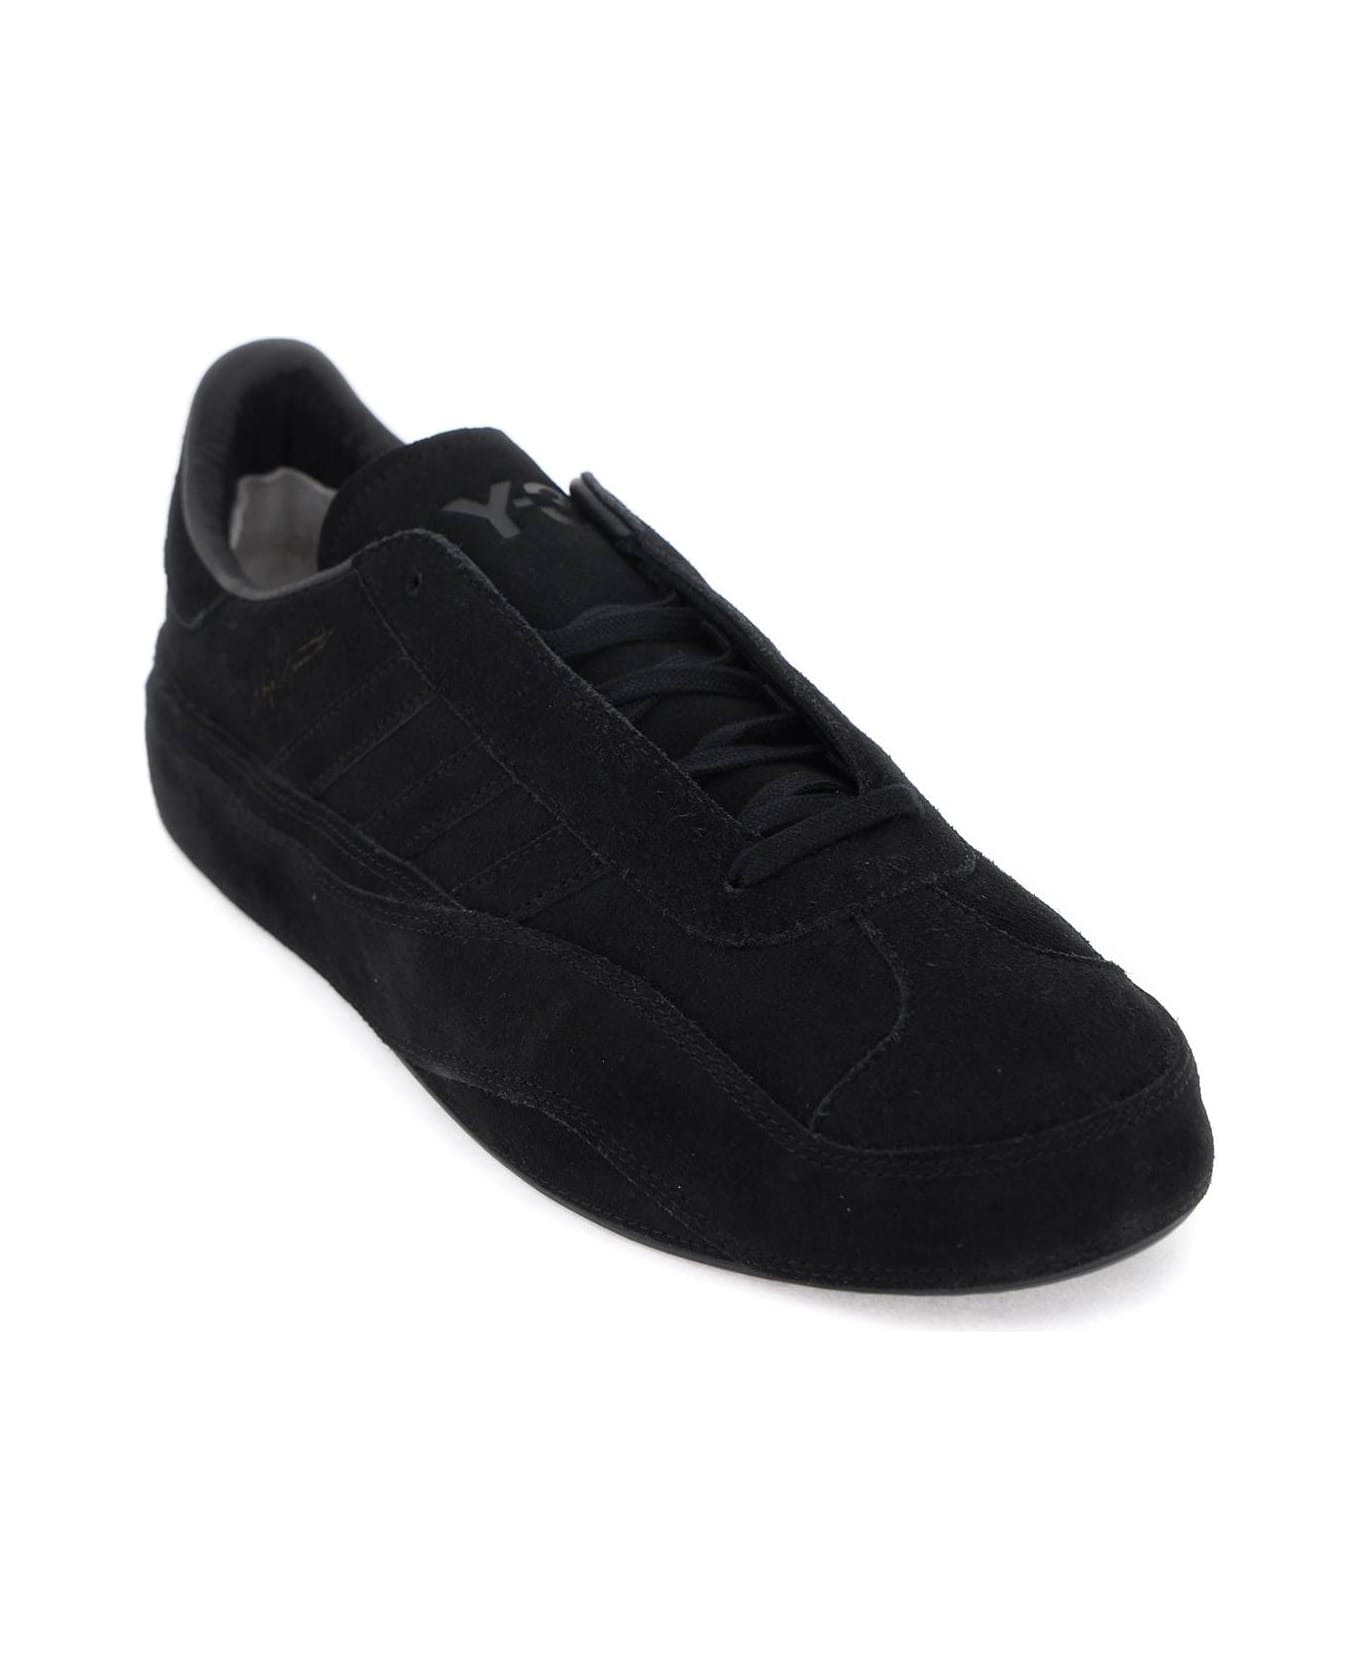 Y-3 Gazelle Sneaker - BLACK BLACK BLACK (Black)